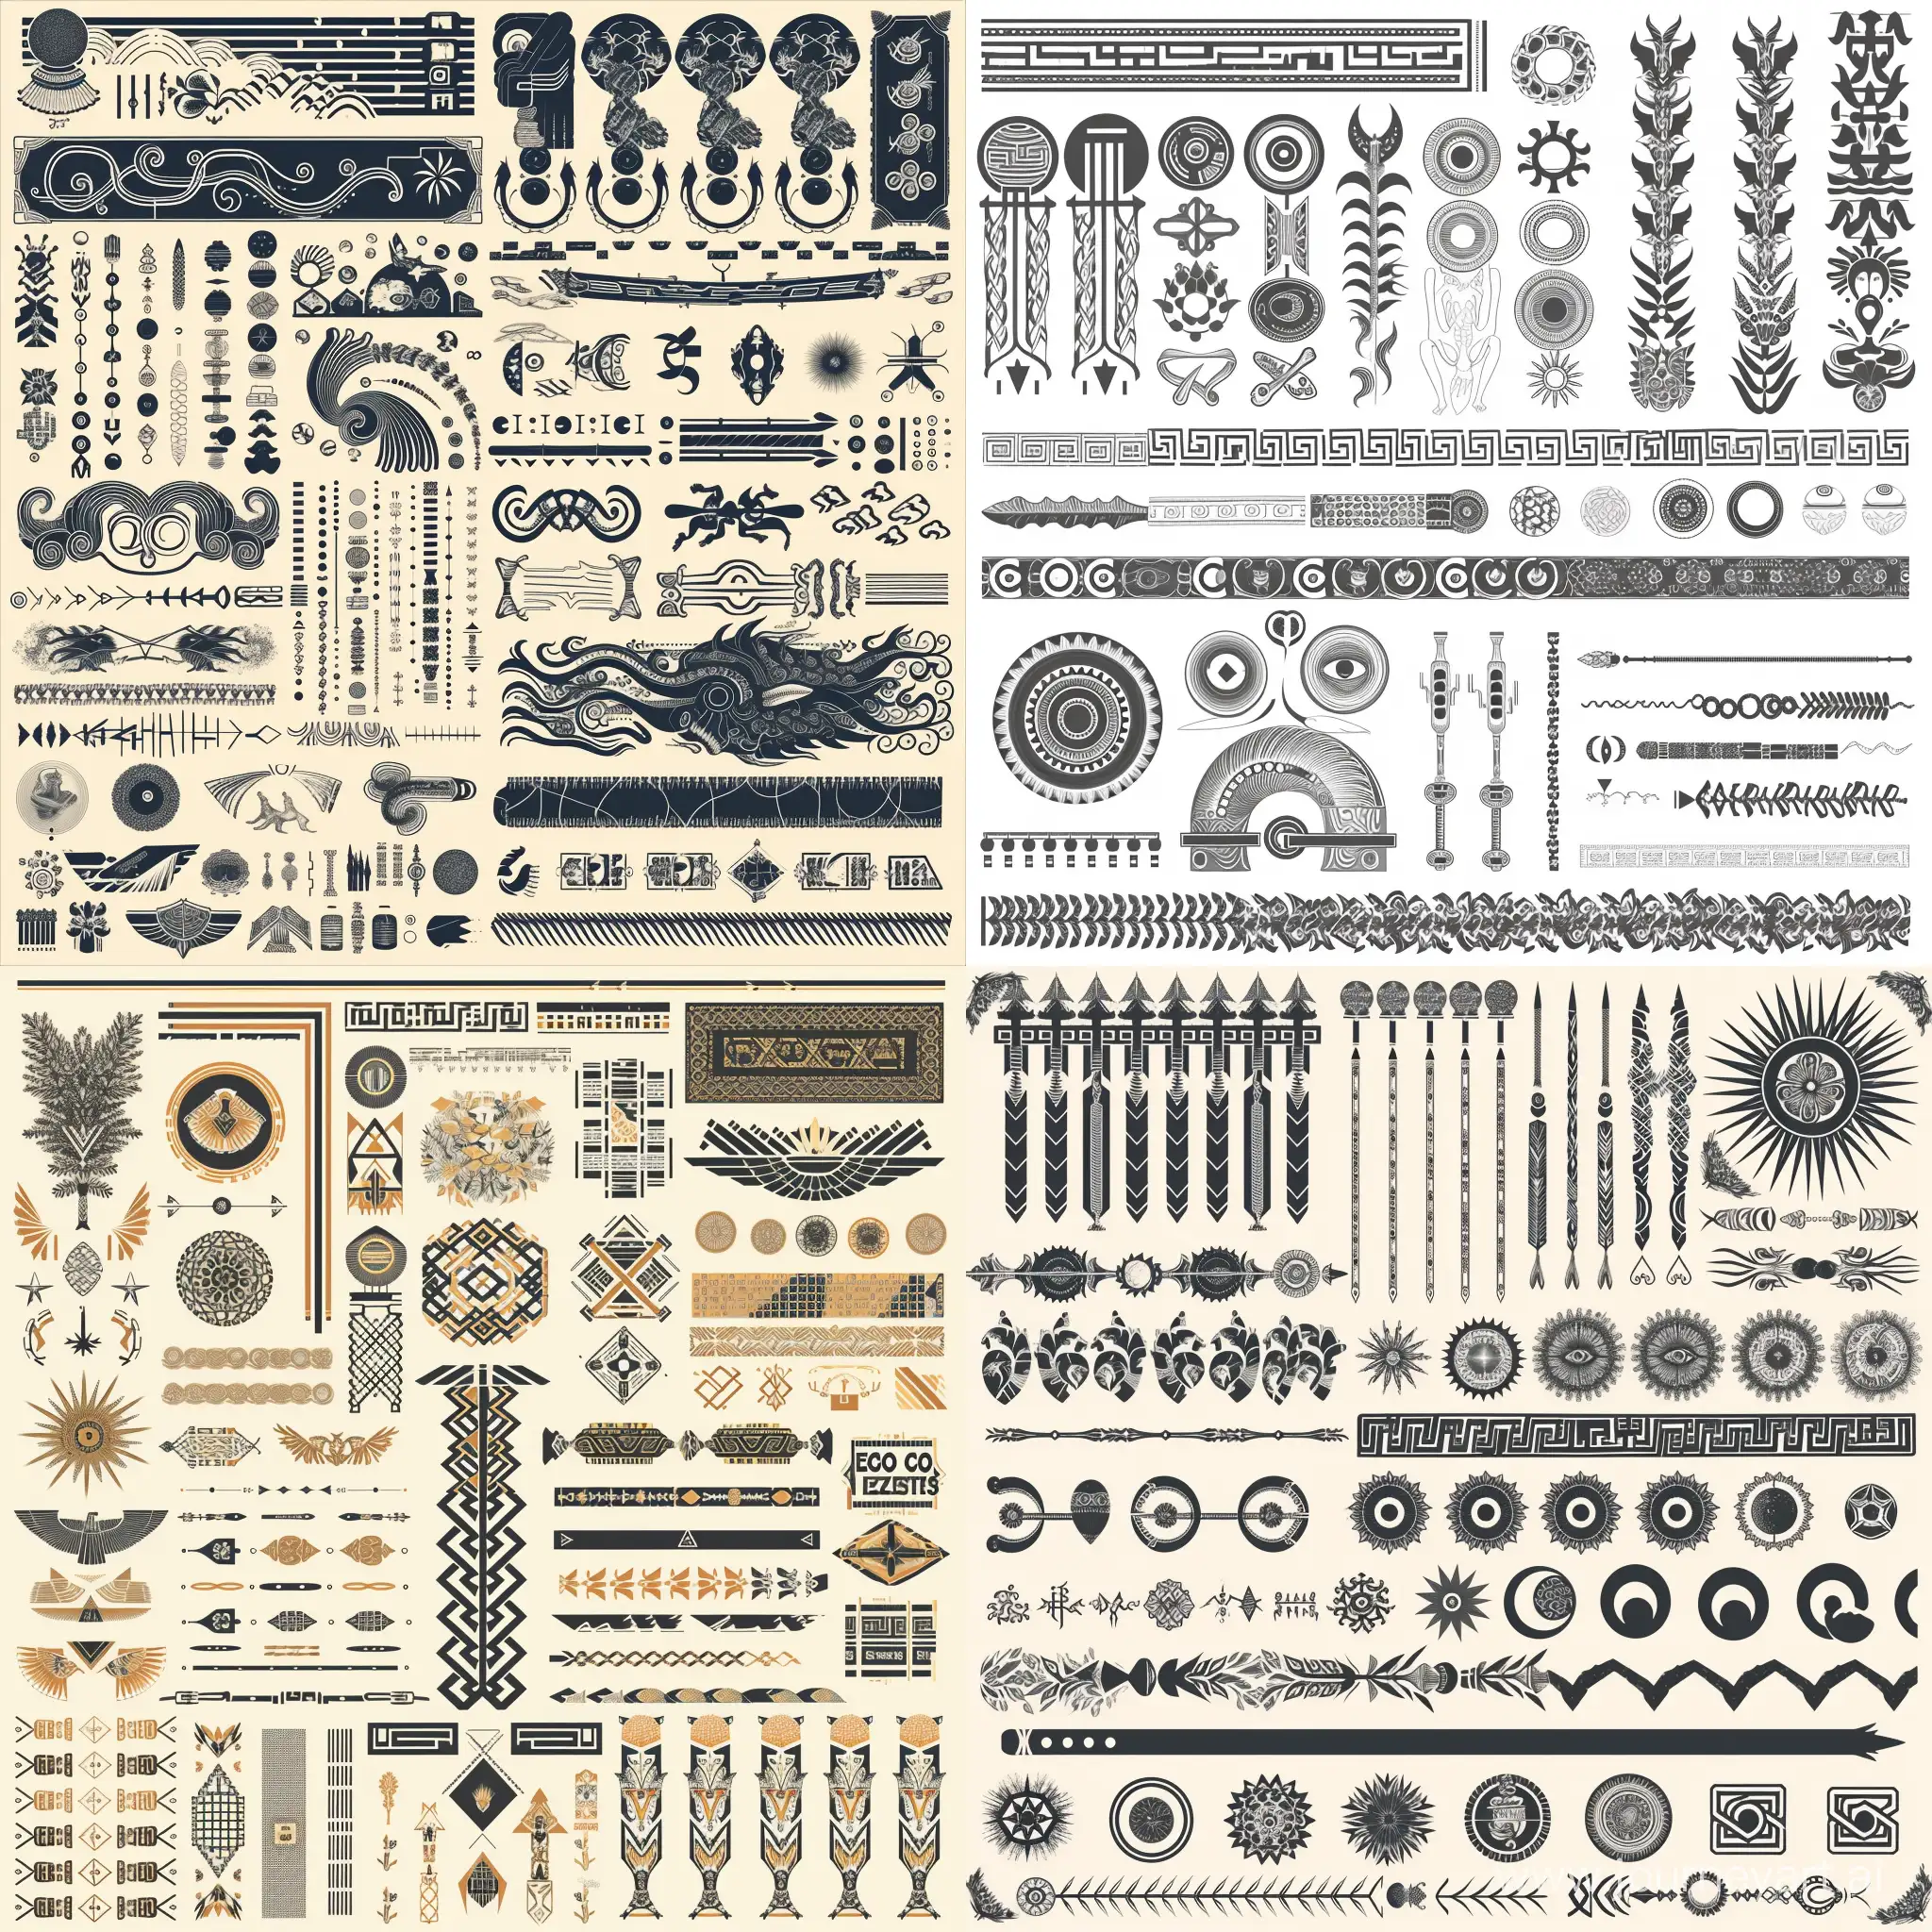 Minimalist-Patterns-and-Symbols-Techno-Eco-and-Greek-Fusion